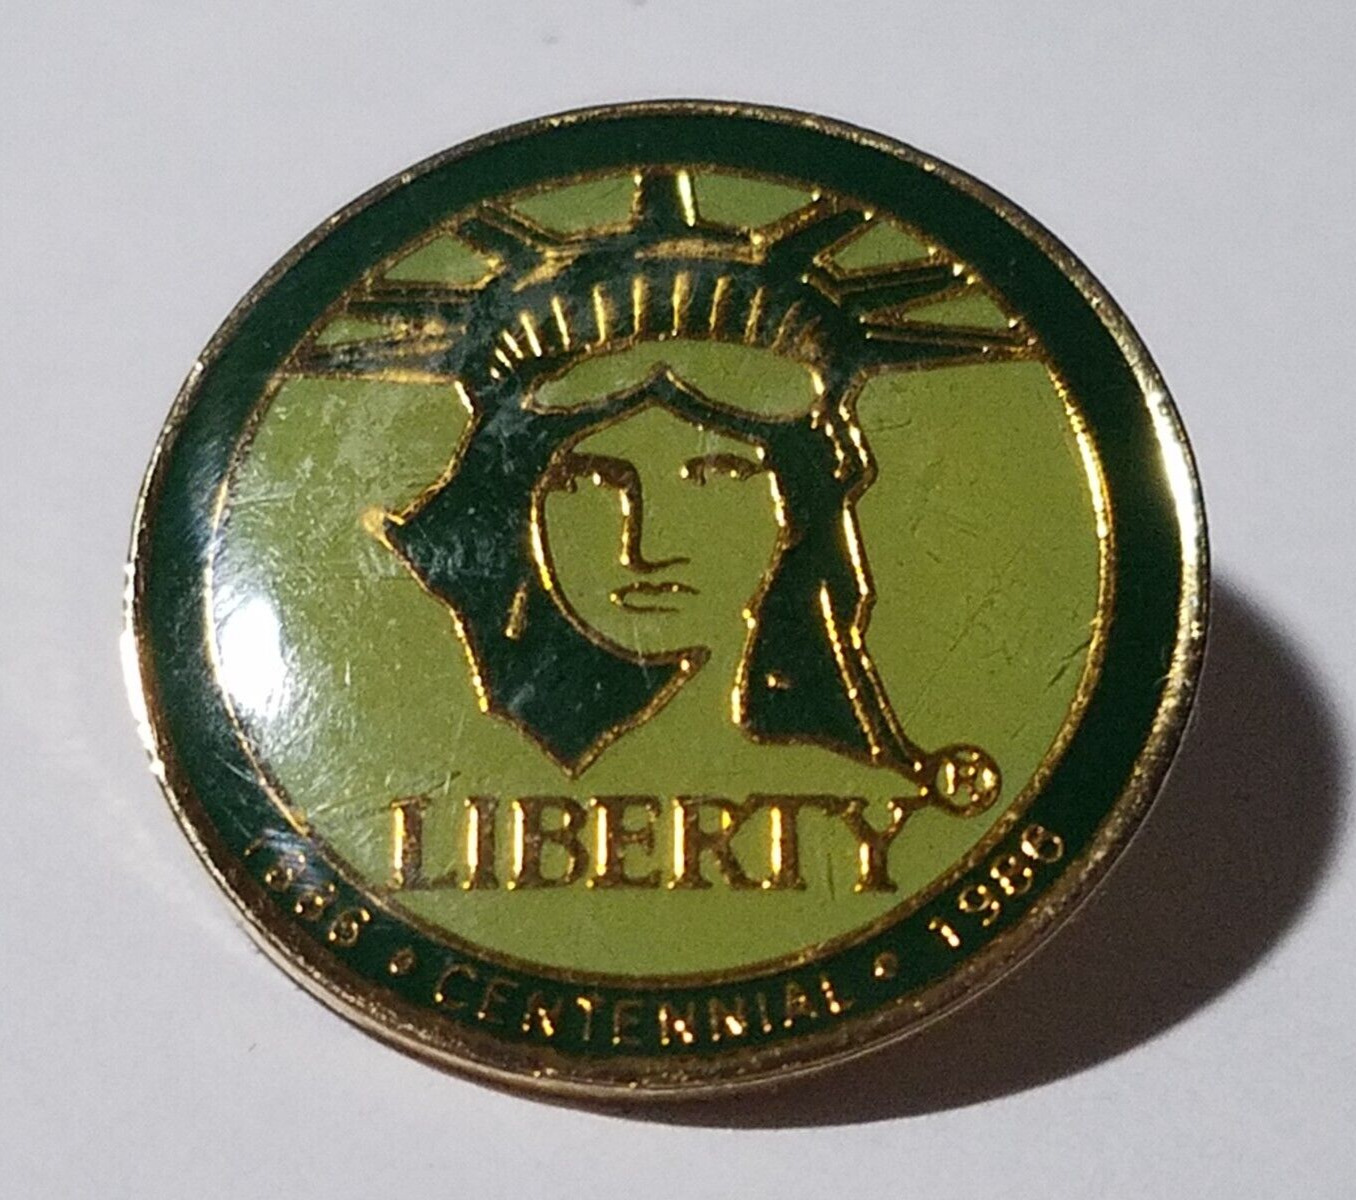 VINTAGE 1886-1986 LIBERTY CENTENNIAL LAPEL PIN